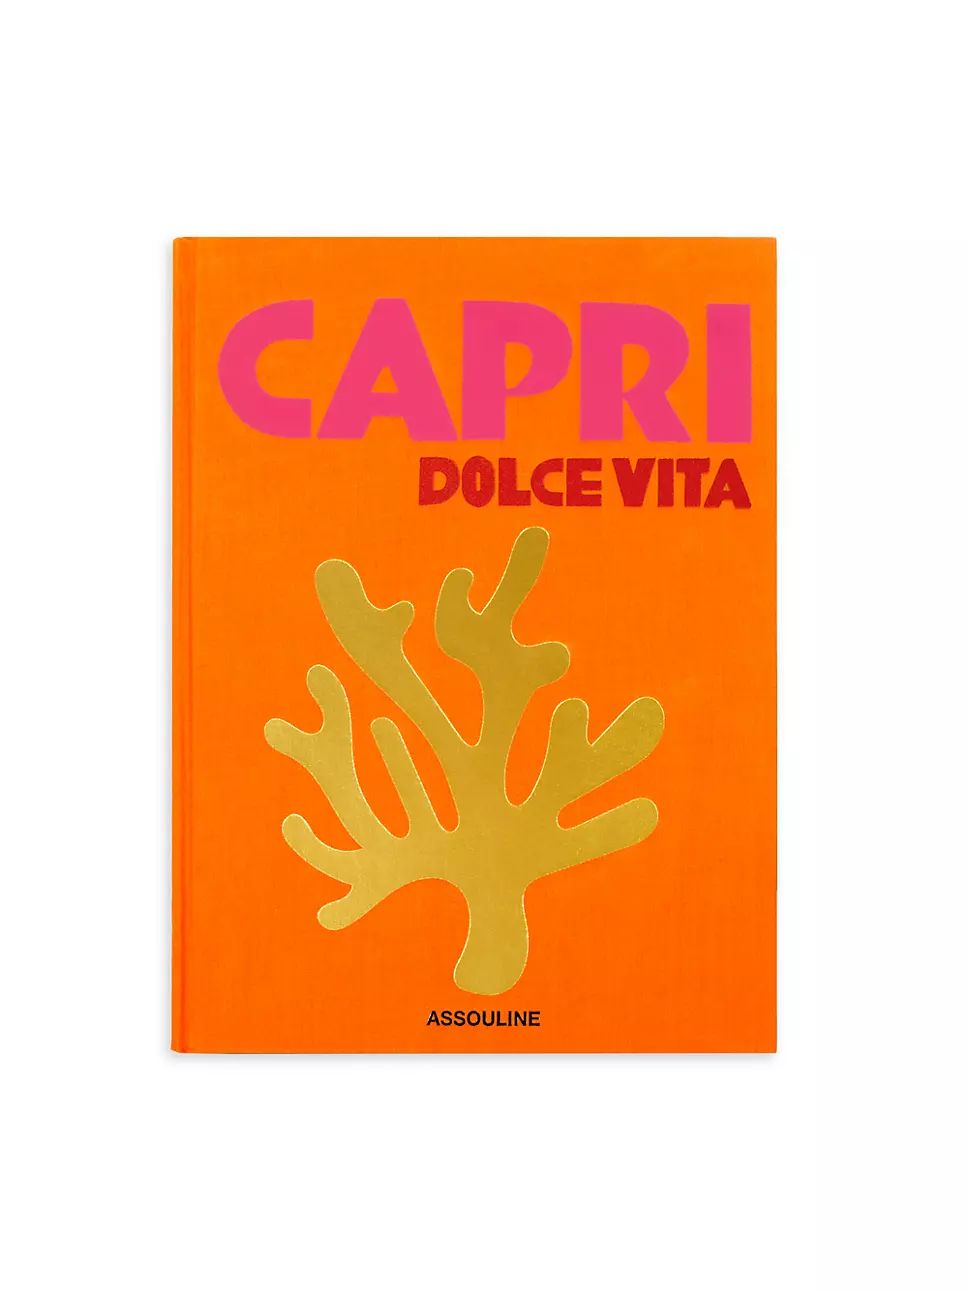 Capri Dolce Vita Coffee Table Book | Saks Fifth Avenue